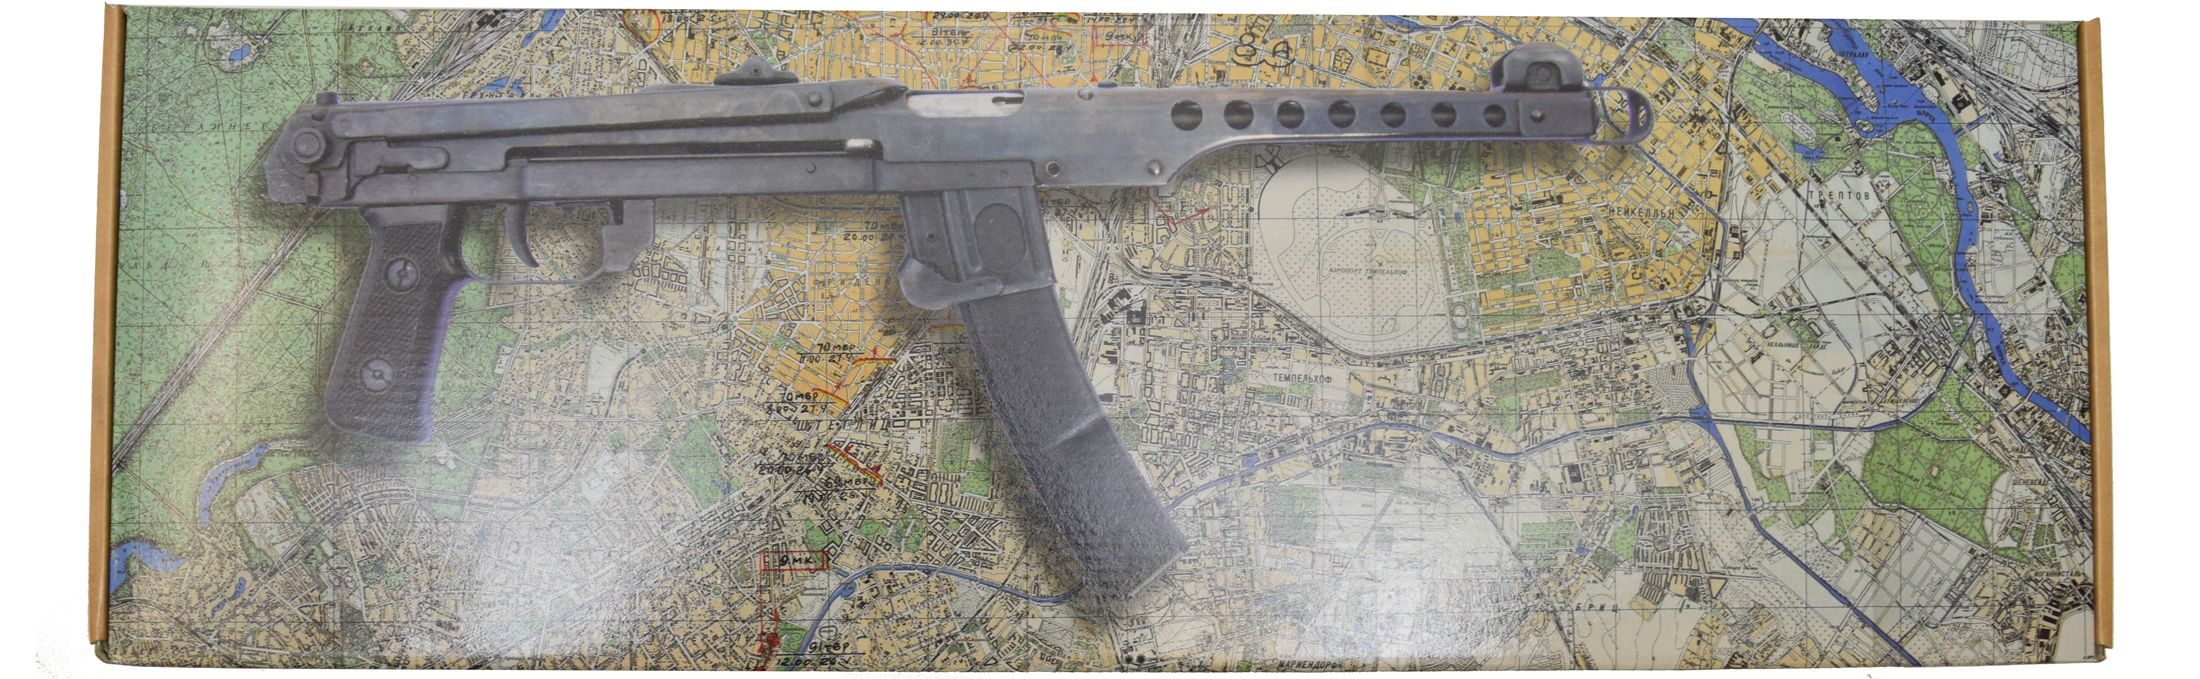 Пистолет-пулемет Судаева PPS 43 PL O (ППС 43 СХП, 7.62 х 25 мм)